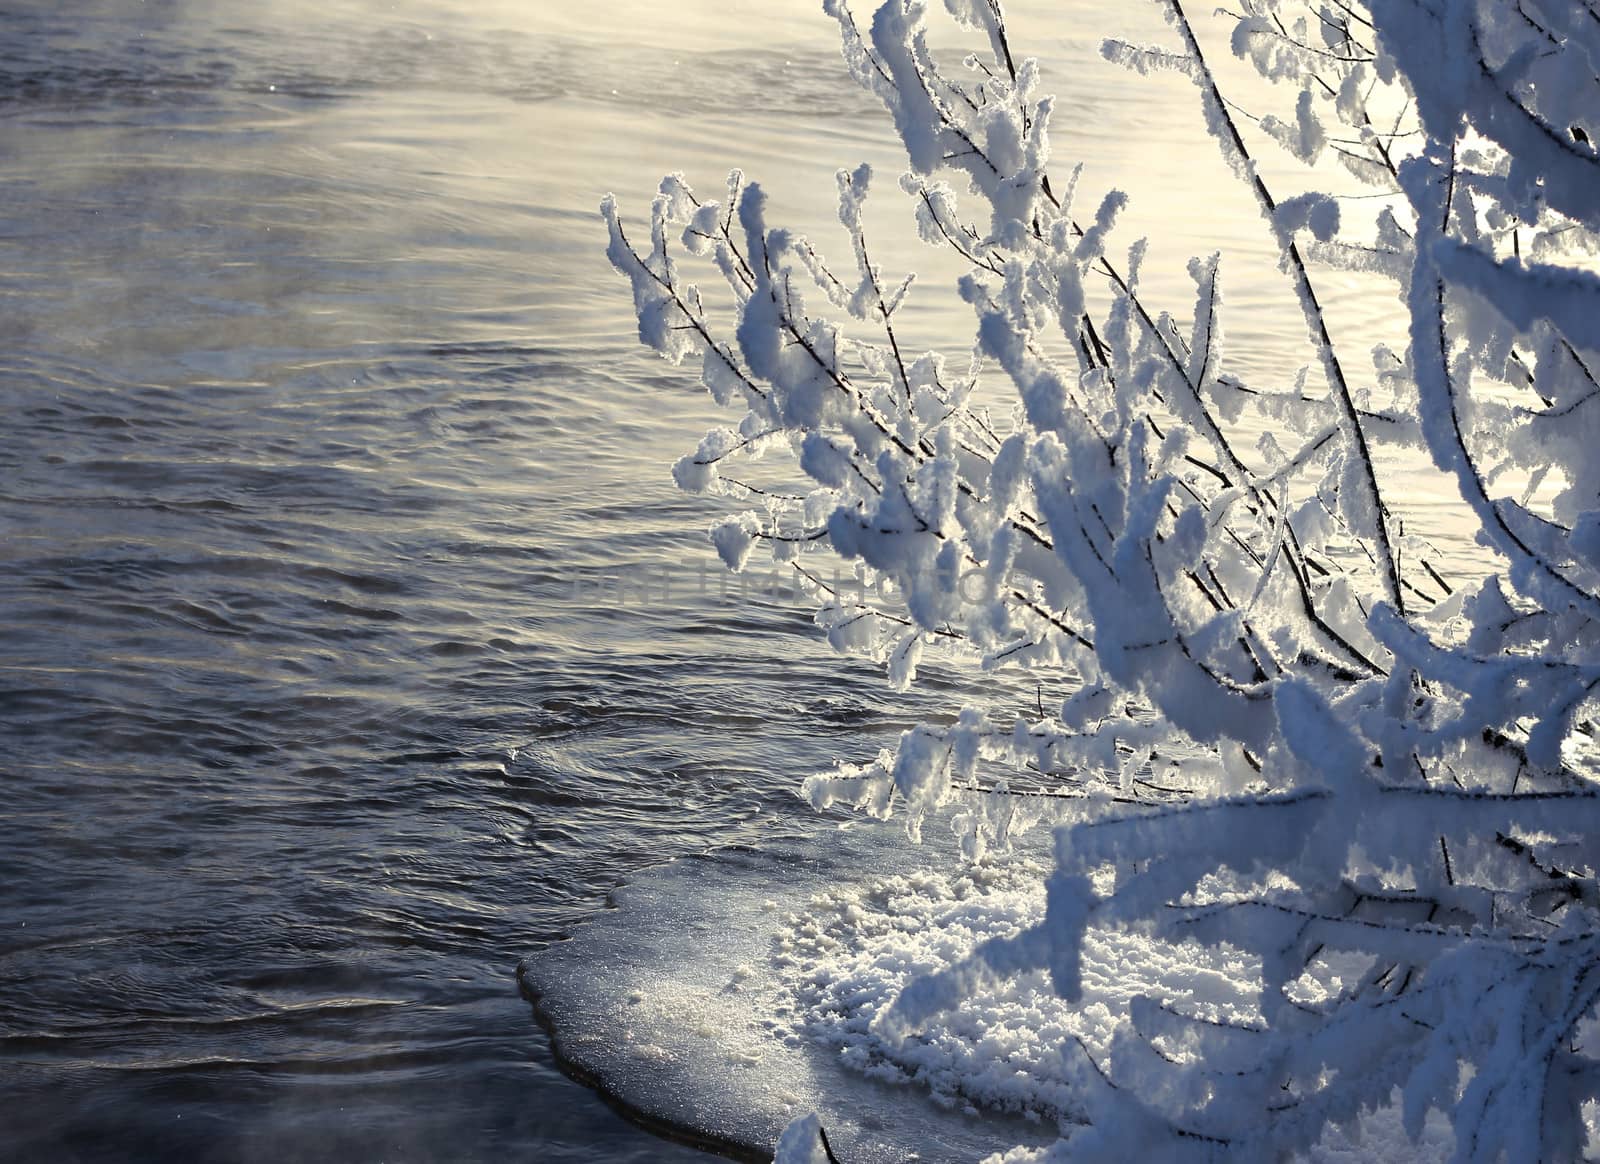 Frozen branches near open water, winter season concept